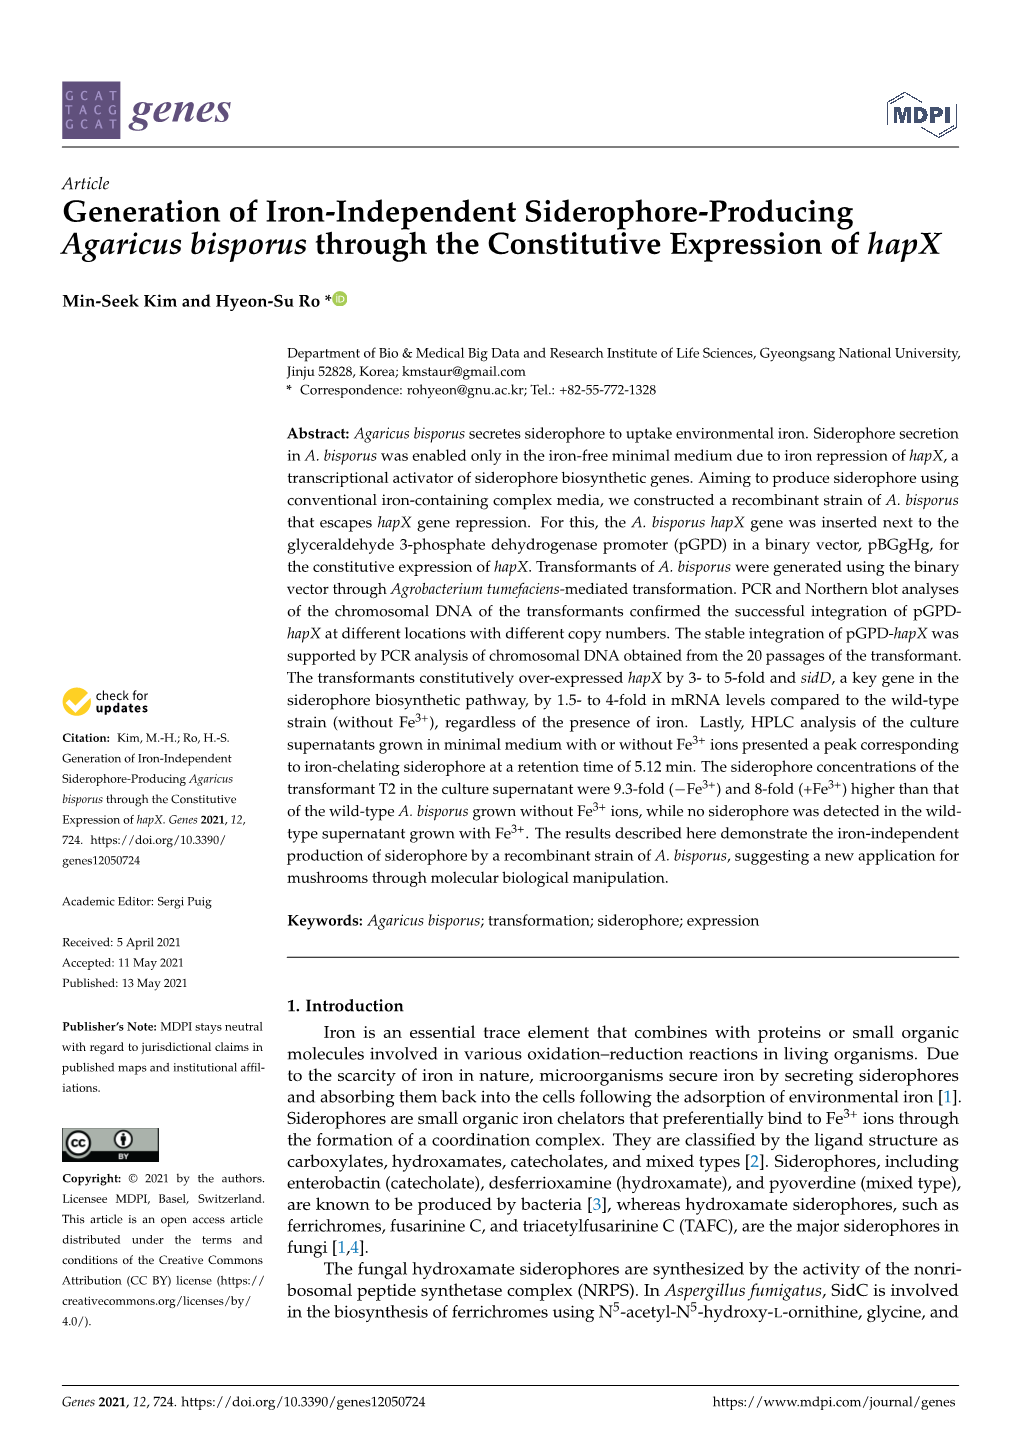 Generation of Iron-Independent Siderophore-Producing Agaricus Bisporus Through the Constitutive Expression of Hapx